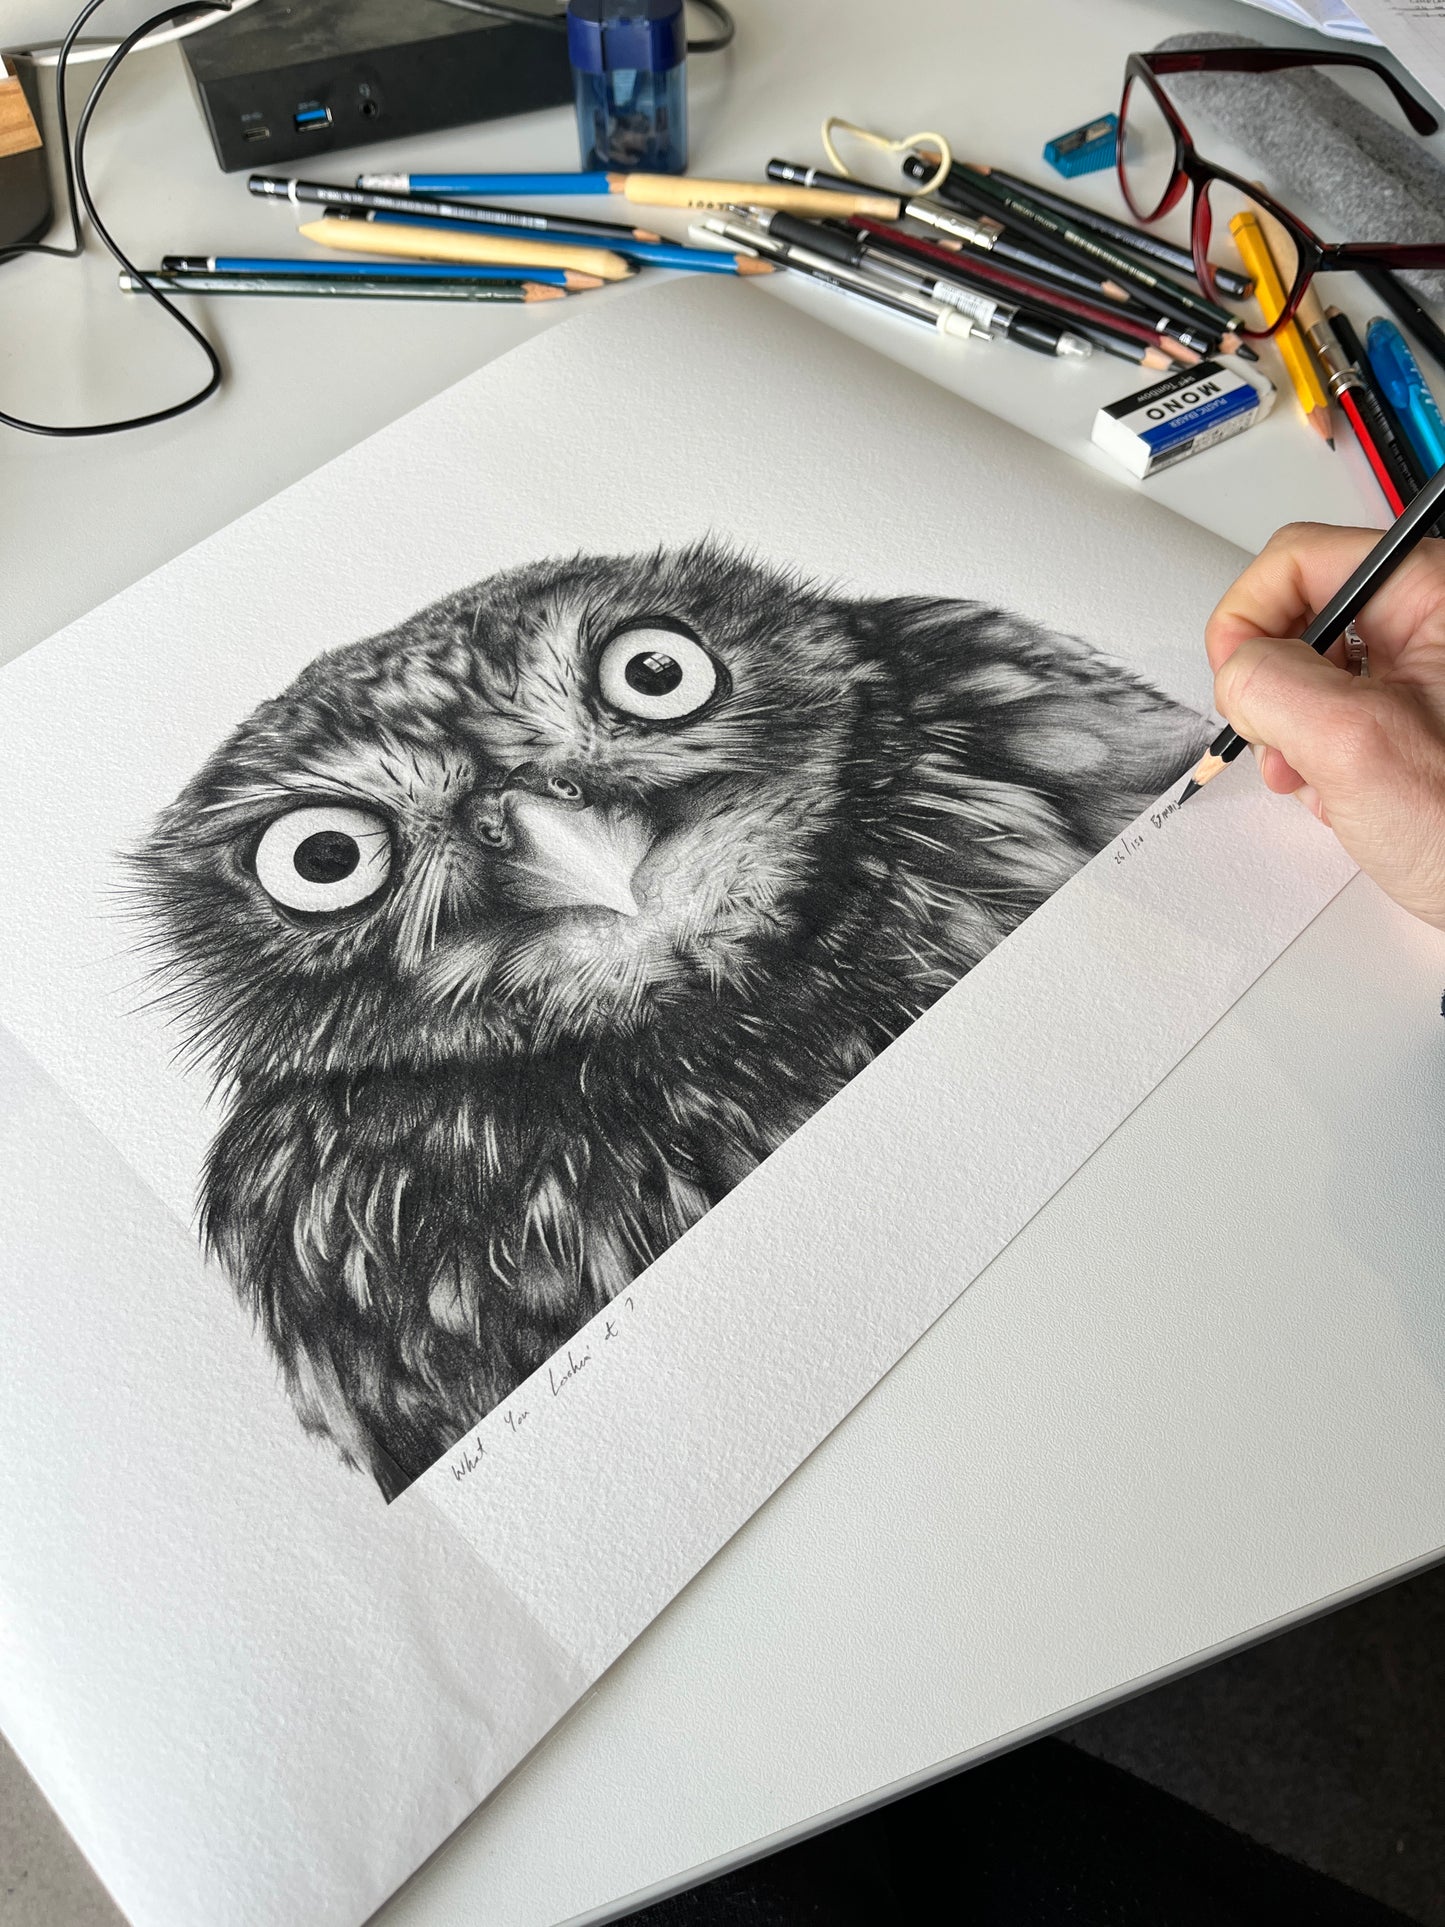 Signed art work of owl